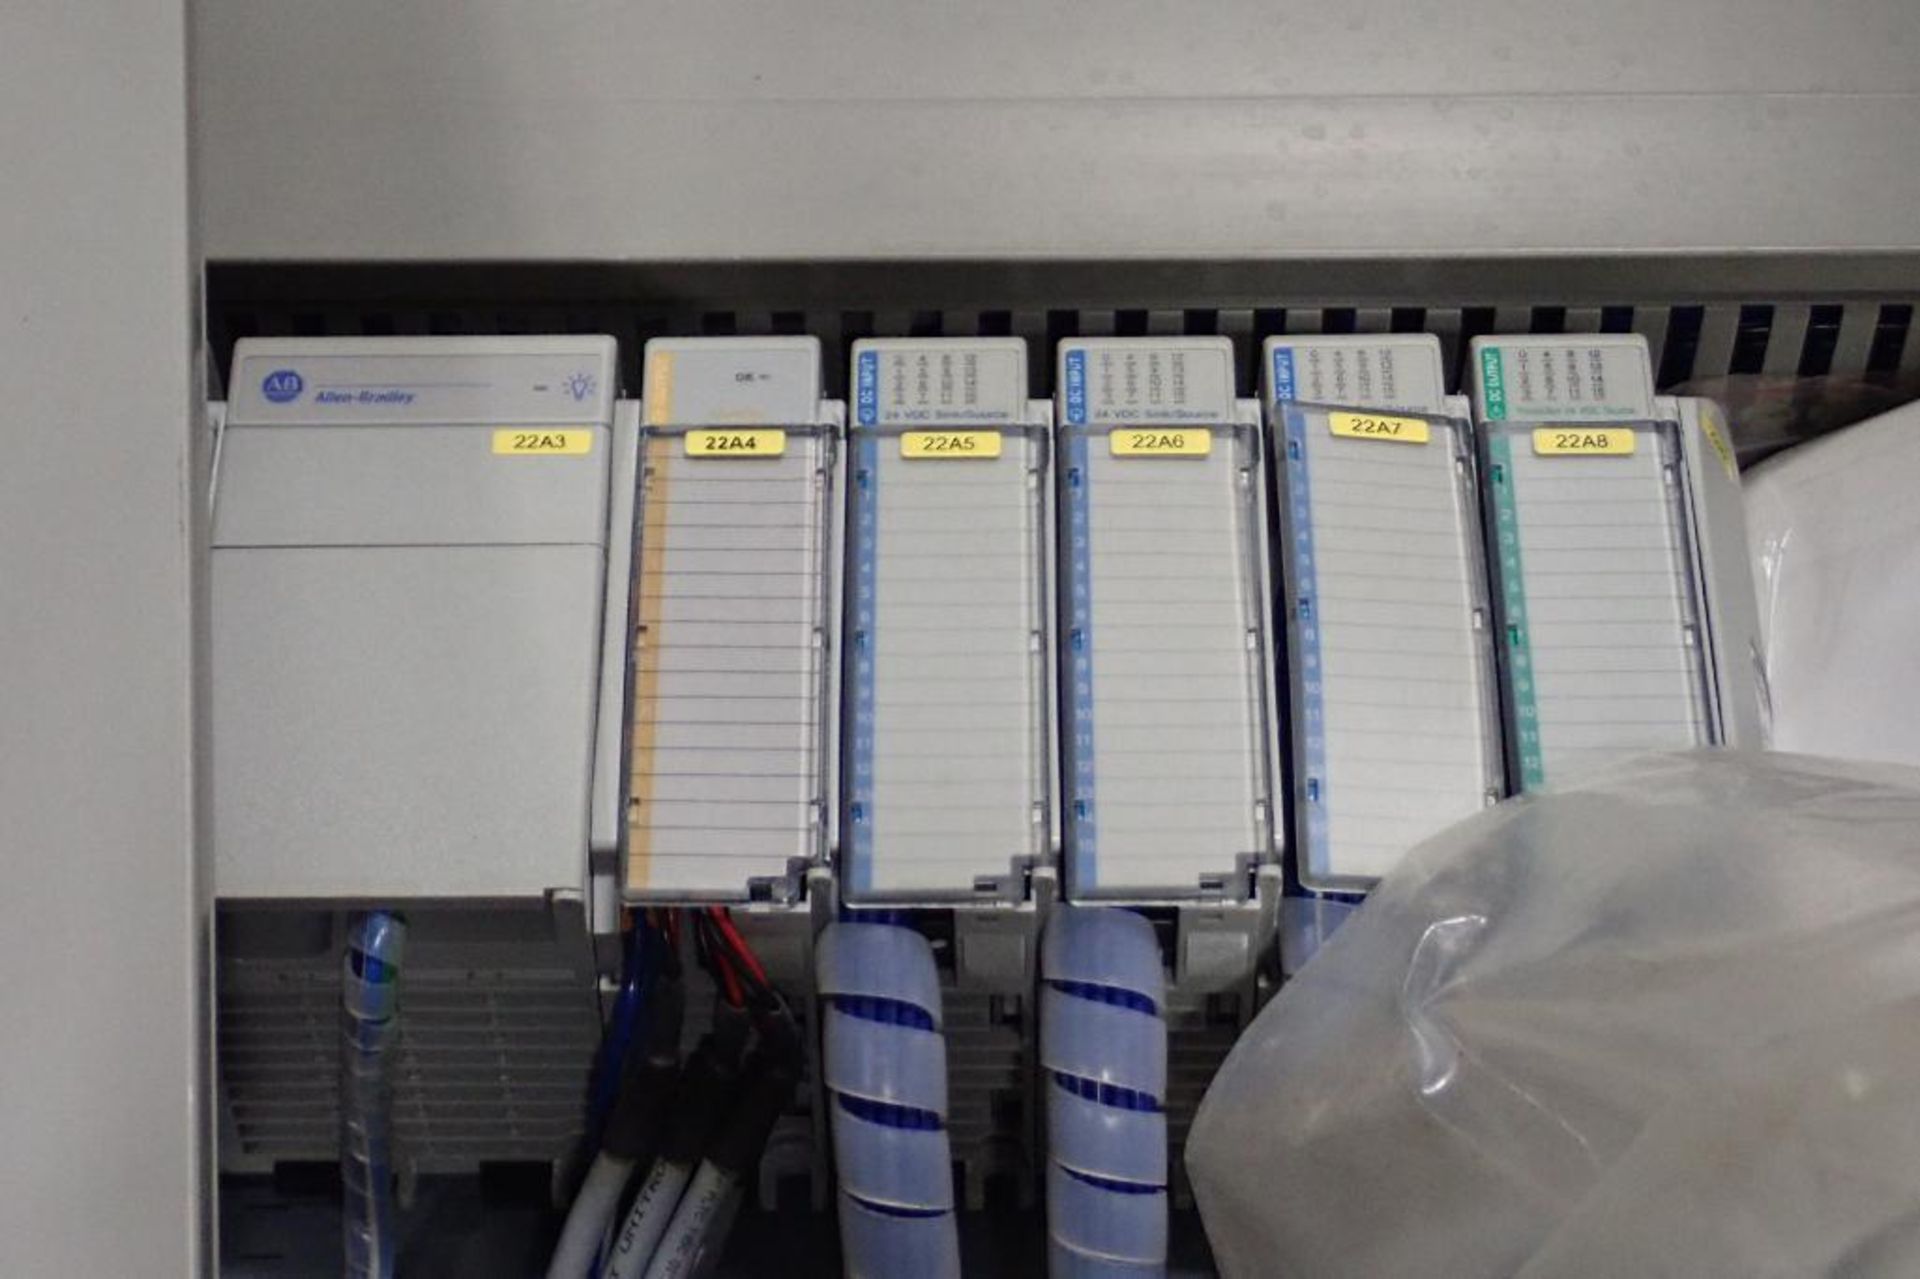 2011 Sollich control panel, Type SGU1300U, Machine No 271610, 70 in. wide x 24 in. deep x 84 in. tal - Image 4 of 9